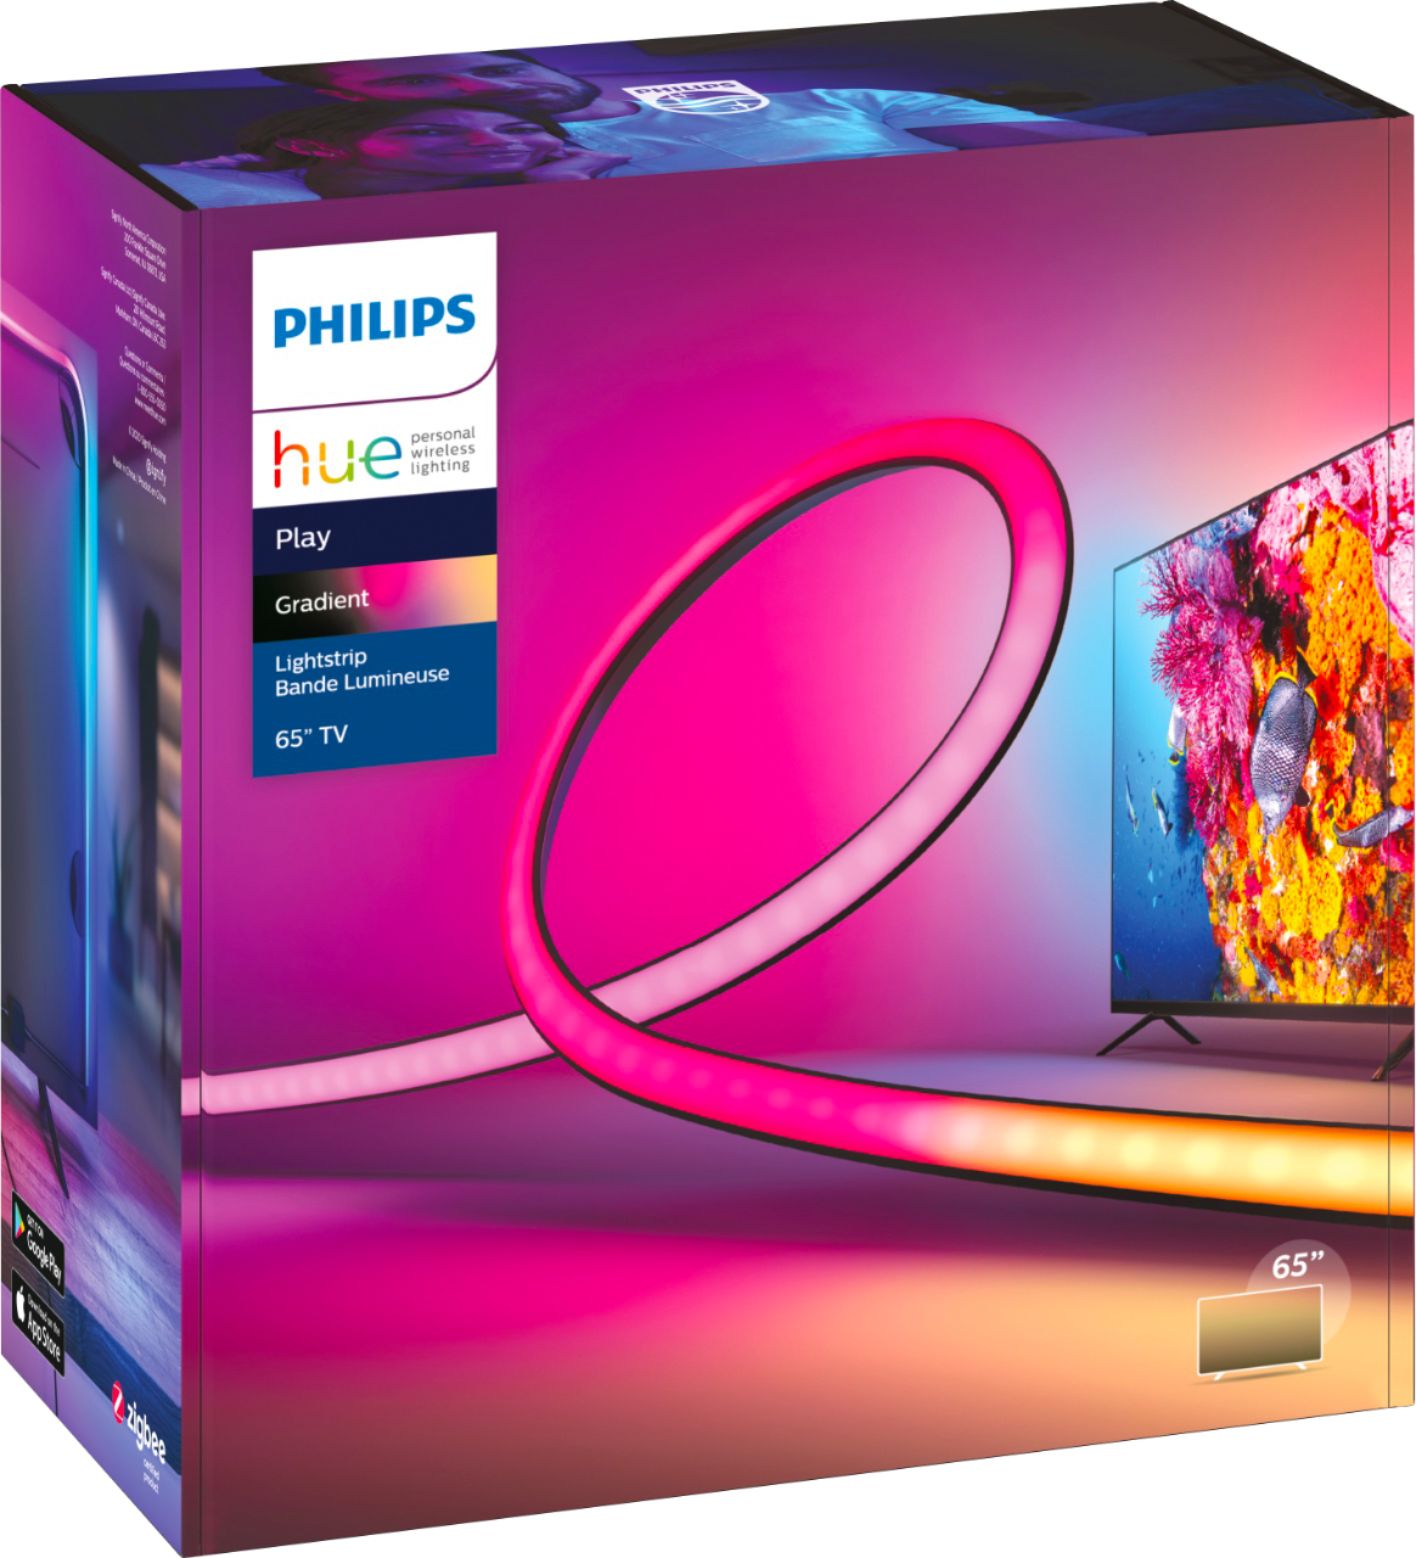 Philips Hue Play Gradient Lightstrip 65 TV desde 187,00 €